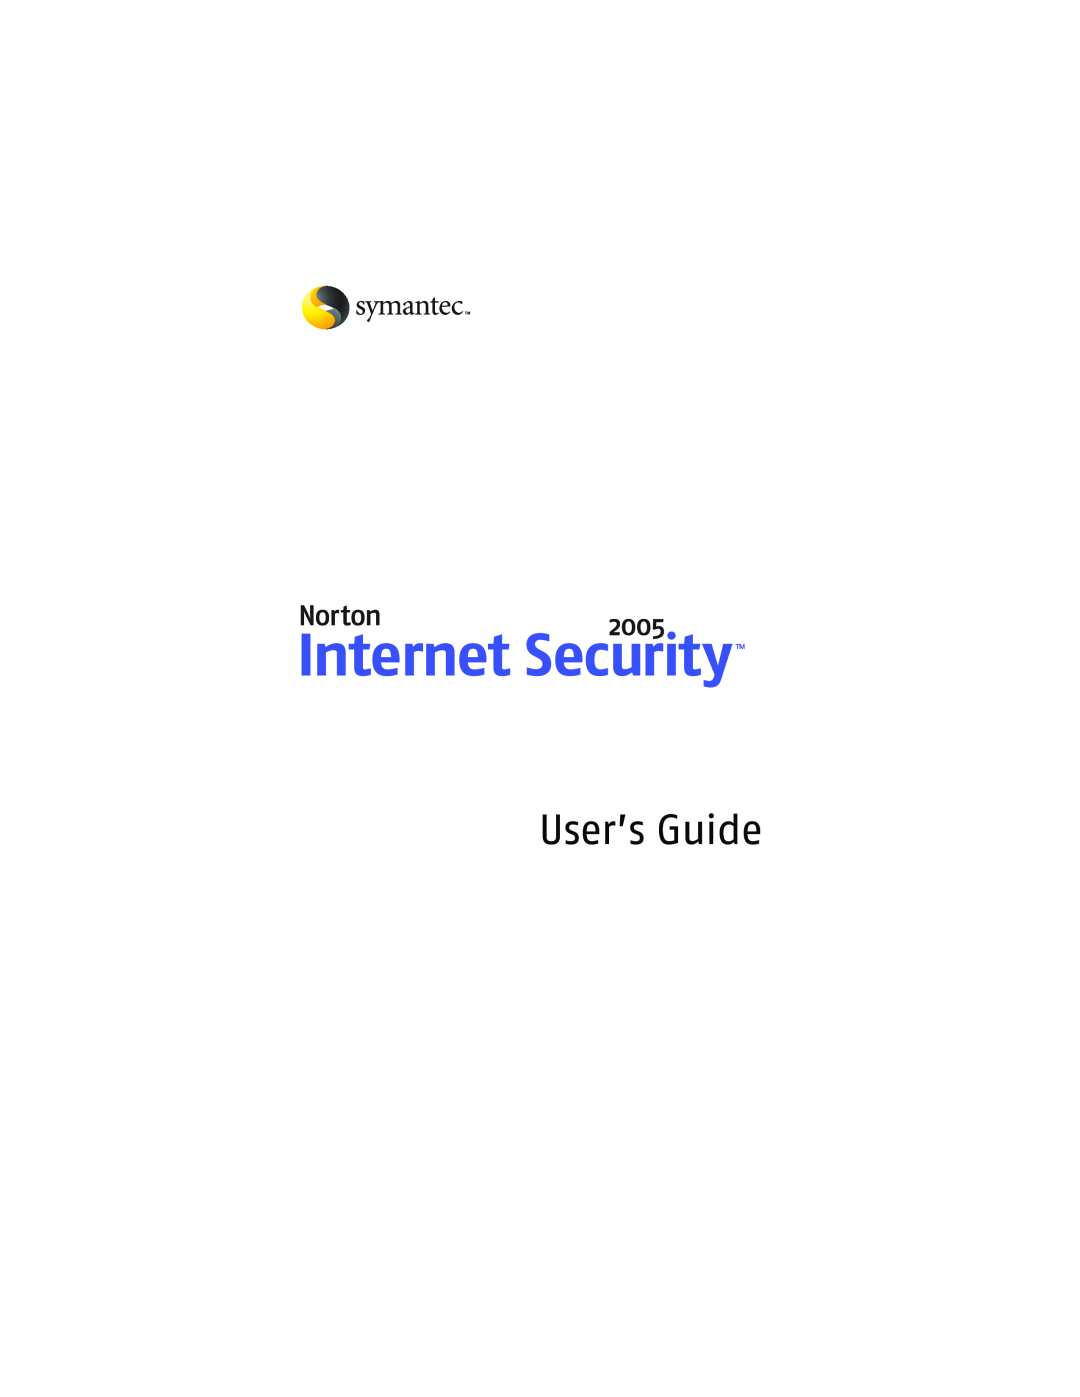 Symantec NIS2005 manual User’s Guide 